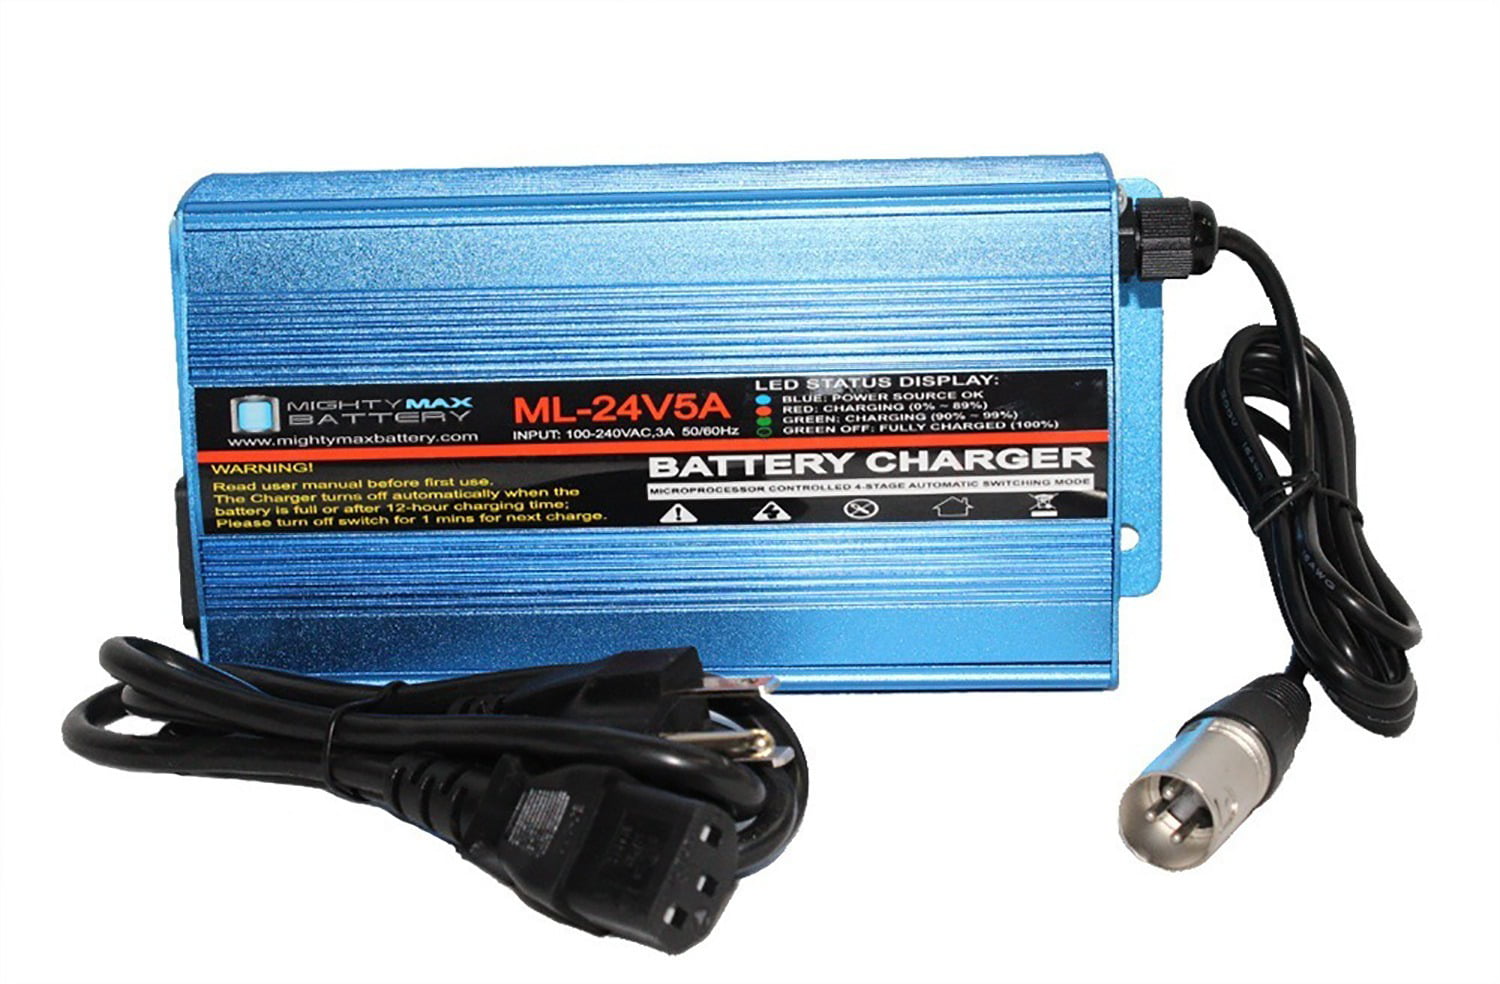 FOR THE KIDS TRAX 24V BATTERY PACKS 24V Volt NEW Battery Charger 